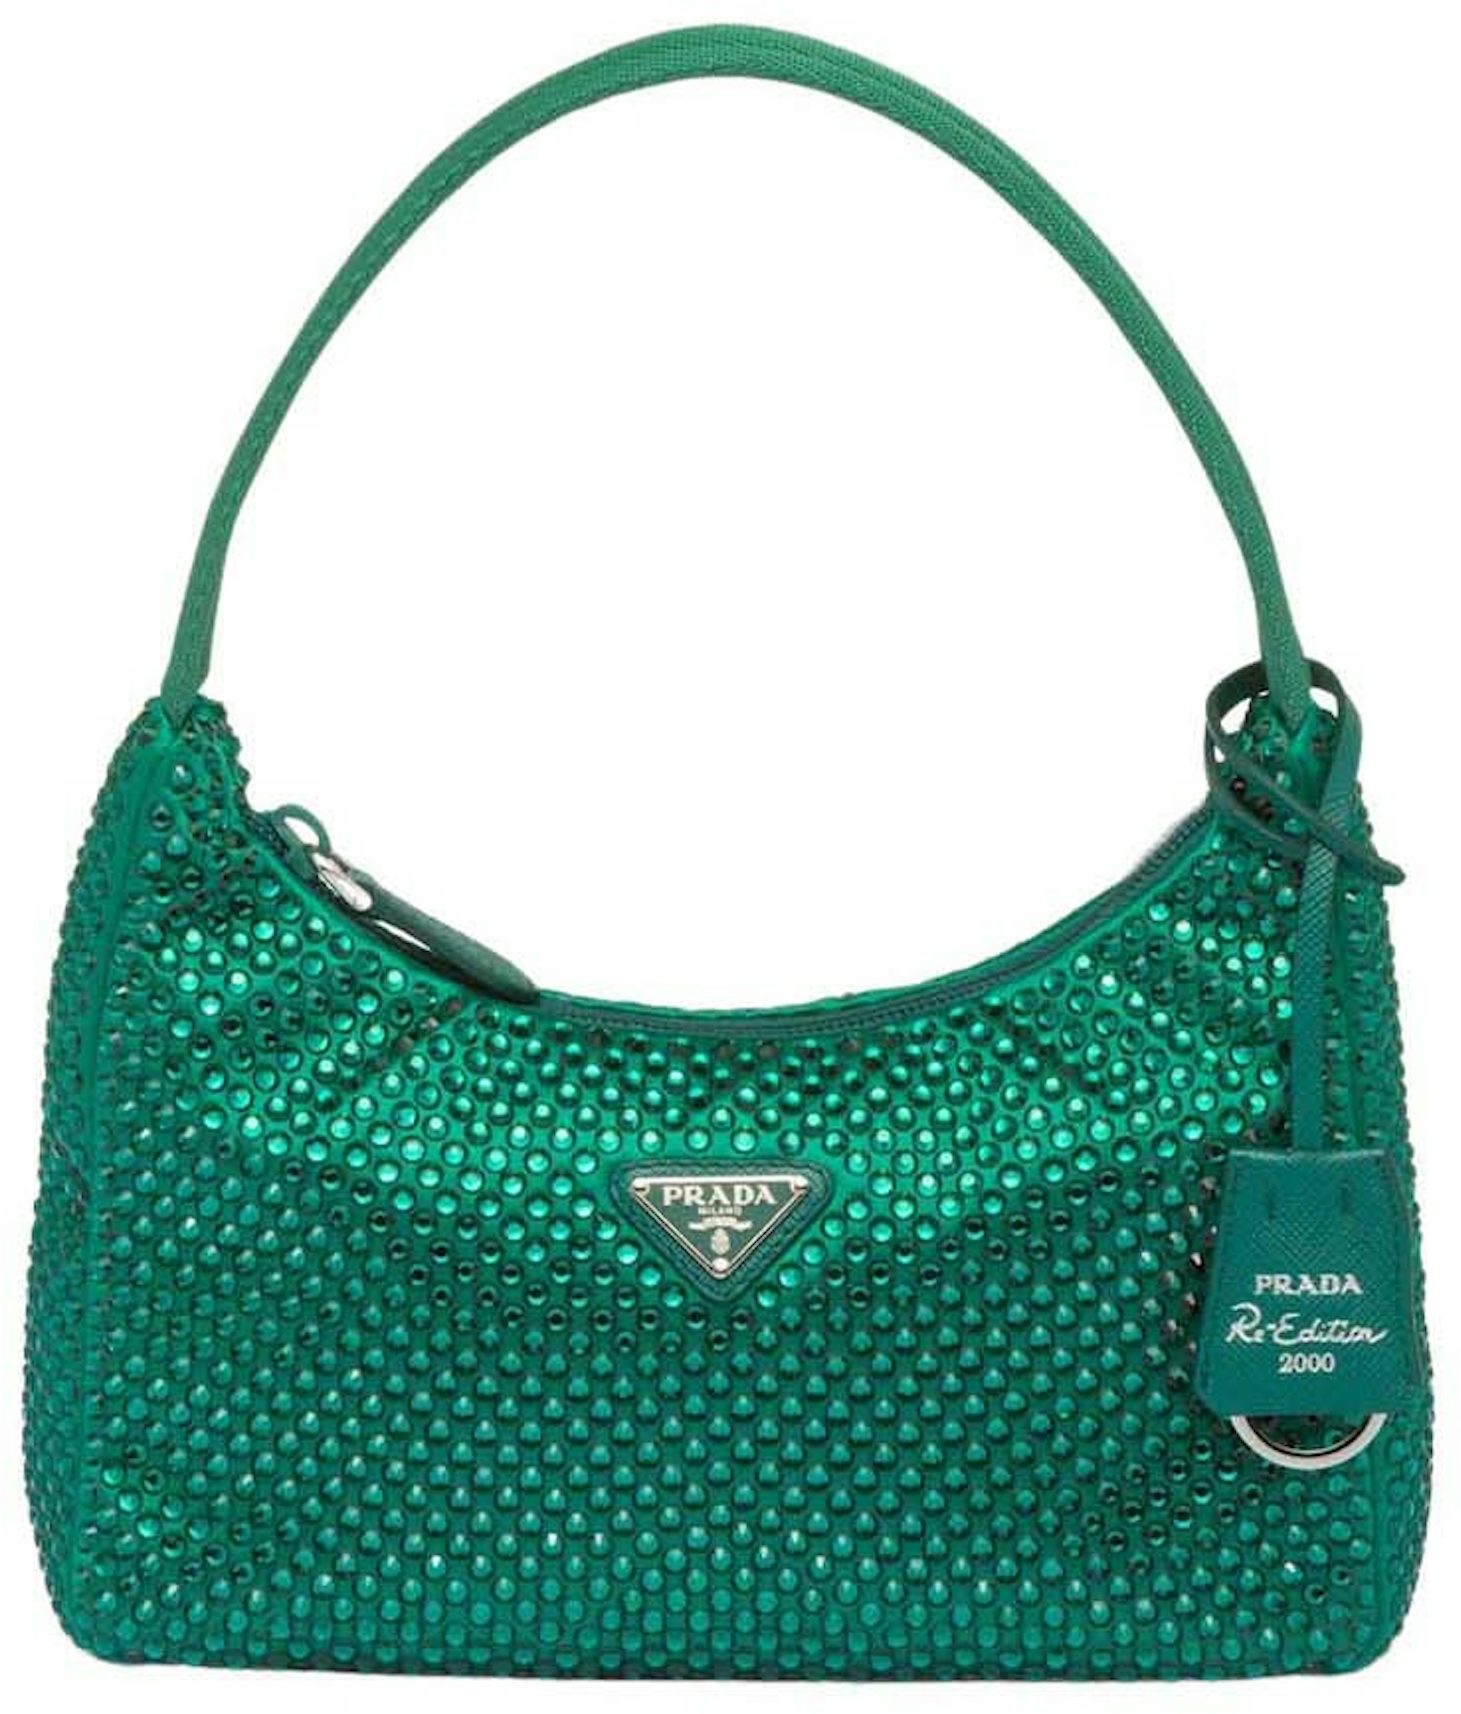 Prada Re-edition 2000 Shoulder Bag in Green